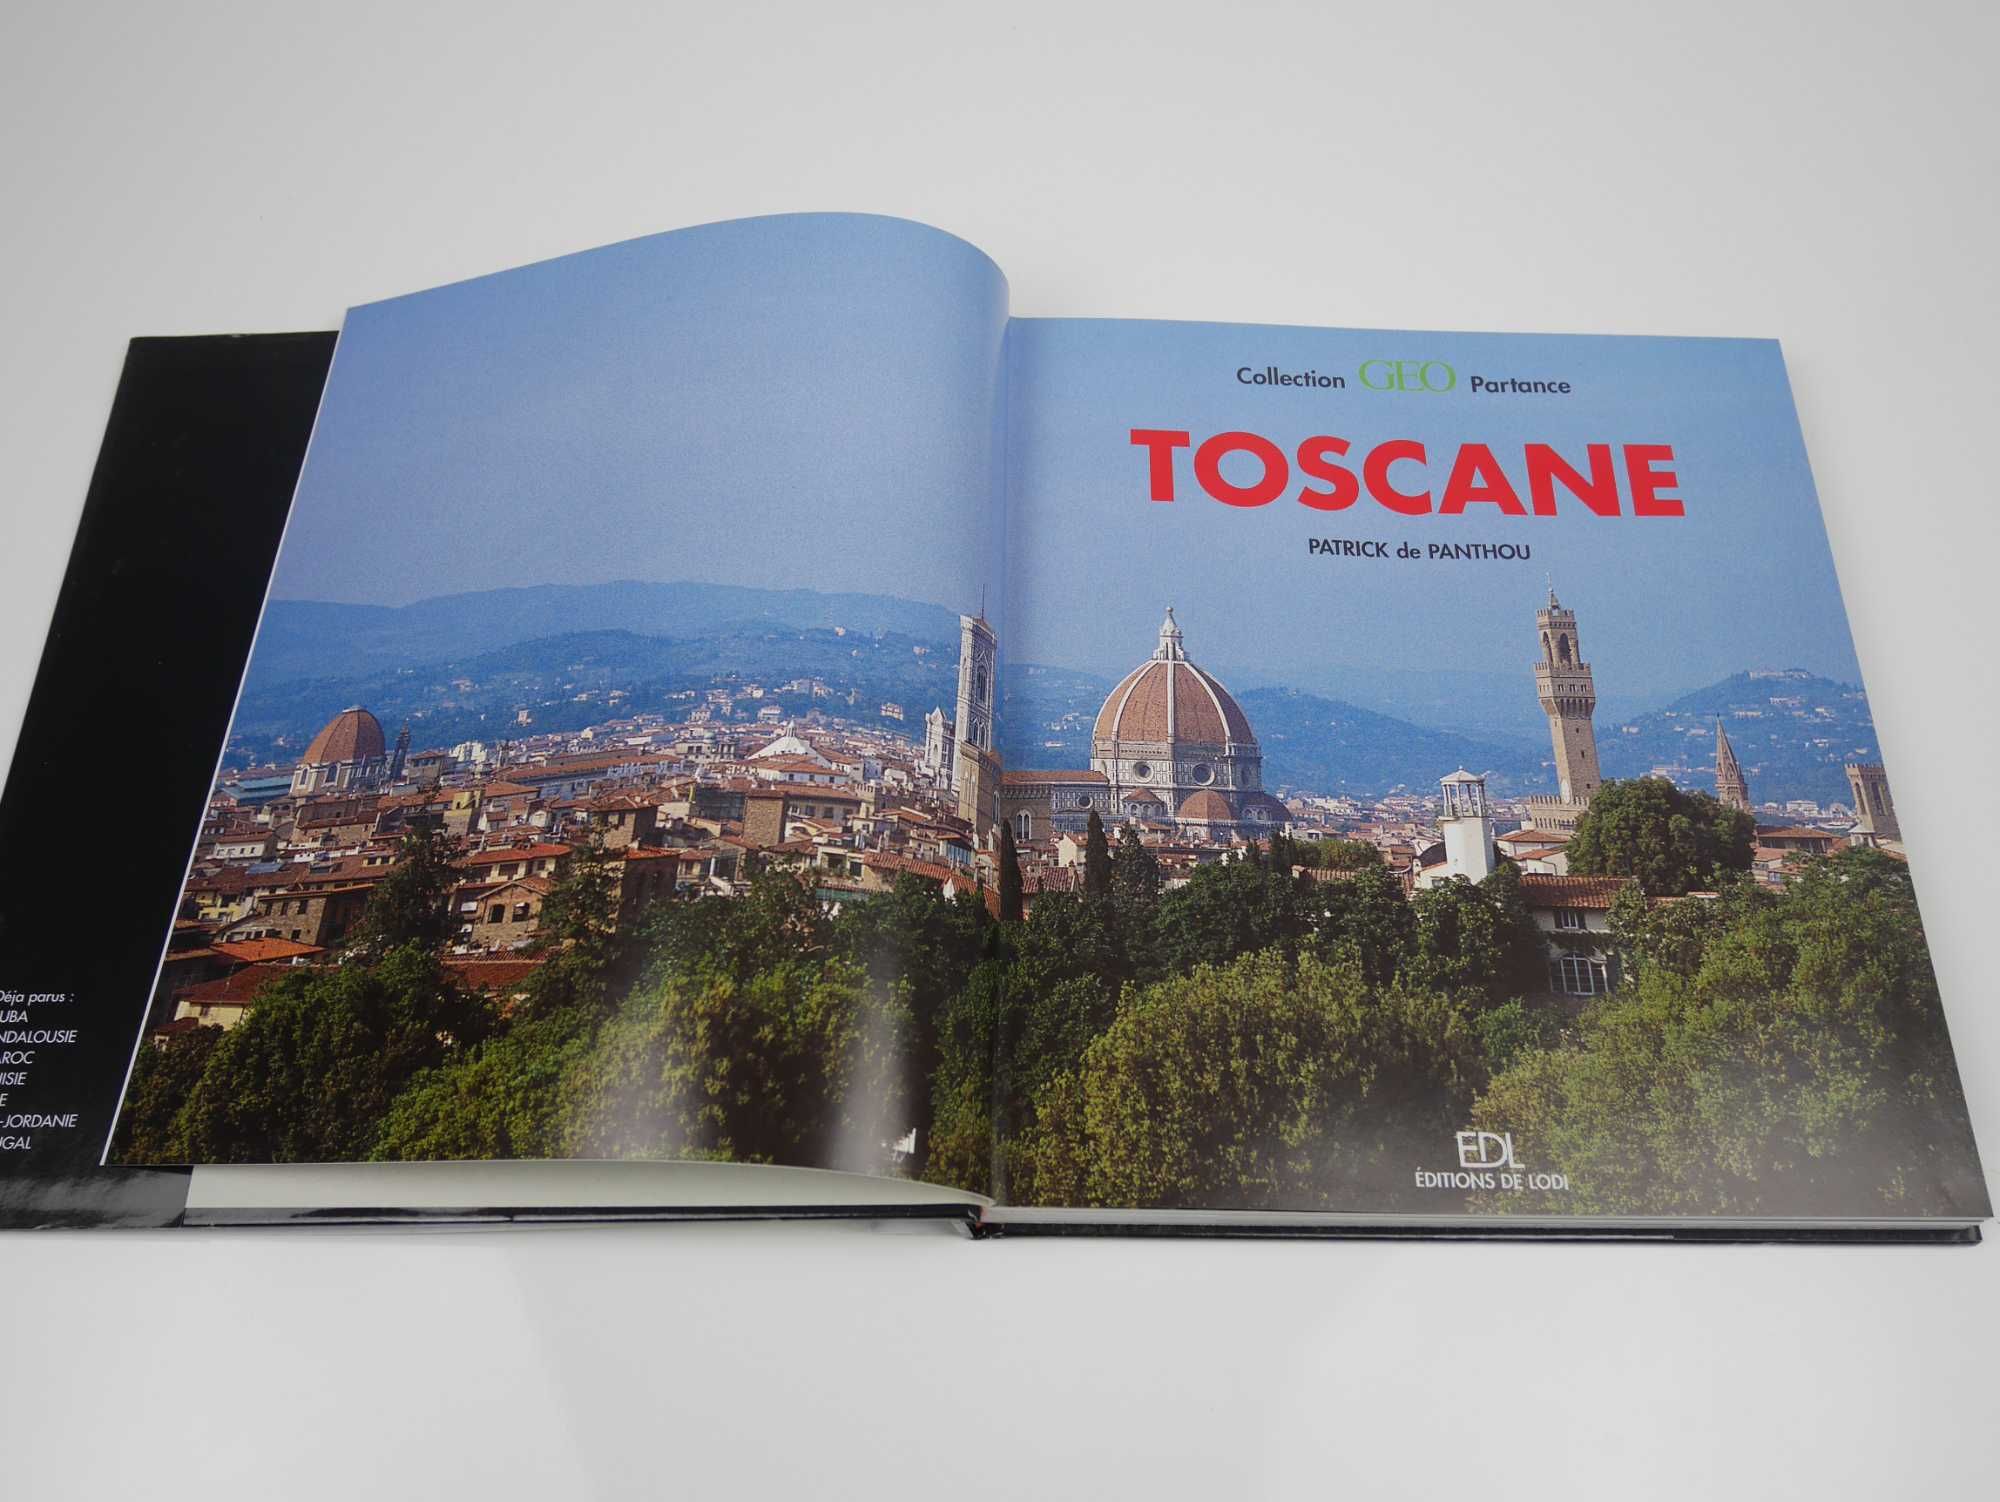 Toscana - album foto cu excelente fotografii panoramice